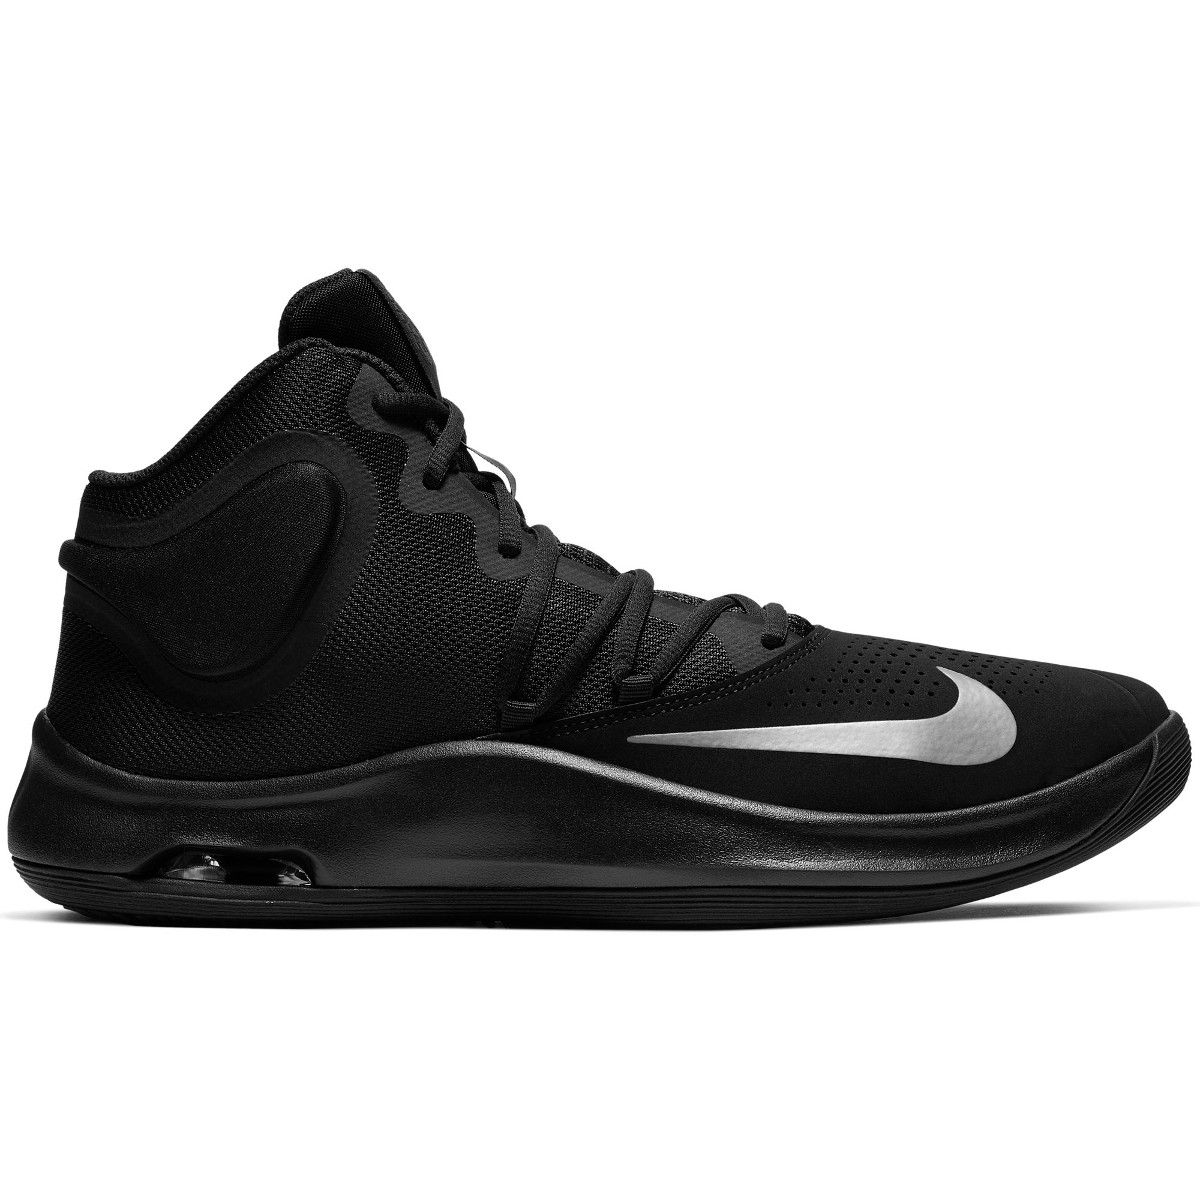 Nike Air Versitile IV NBK Men's Basketball Shoes CJ6703-001